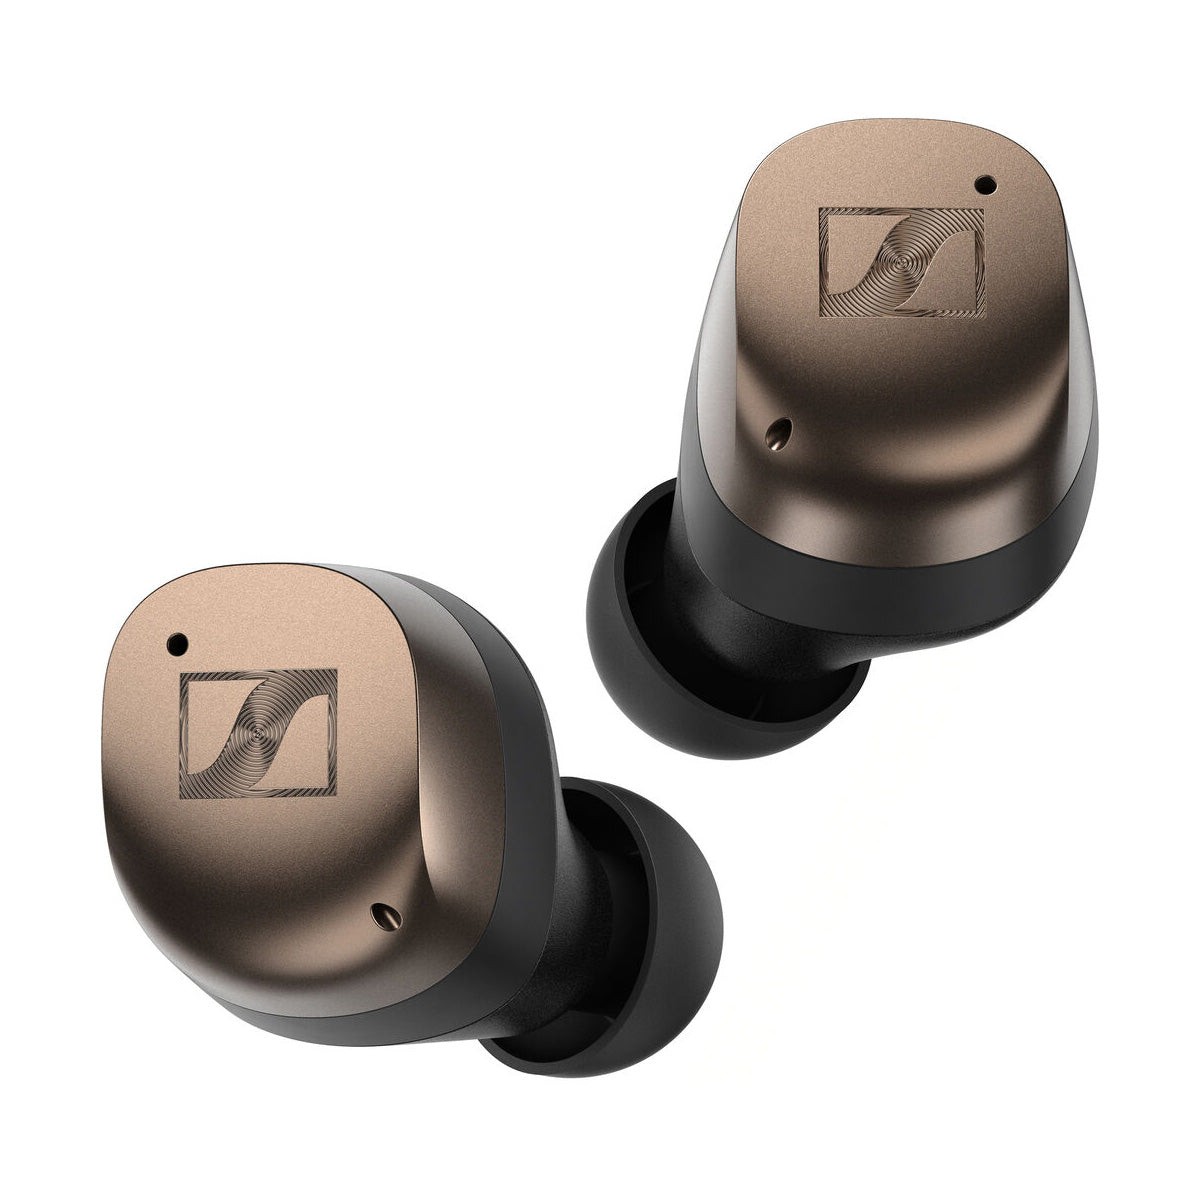 Sennheiser MOMENTUM True Wireless 4 Noise-Canceling Earbuds - Black Copper